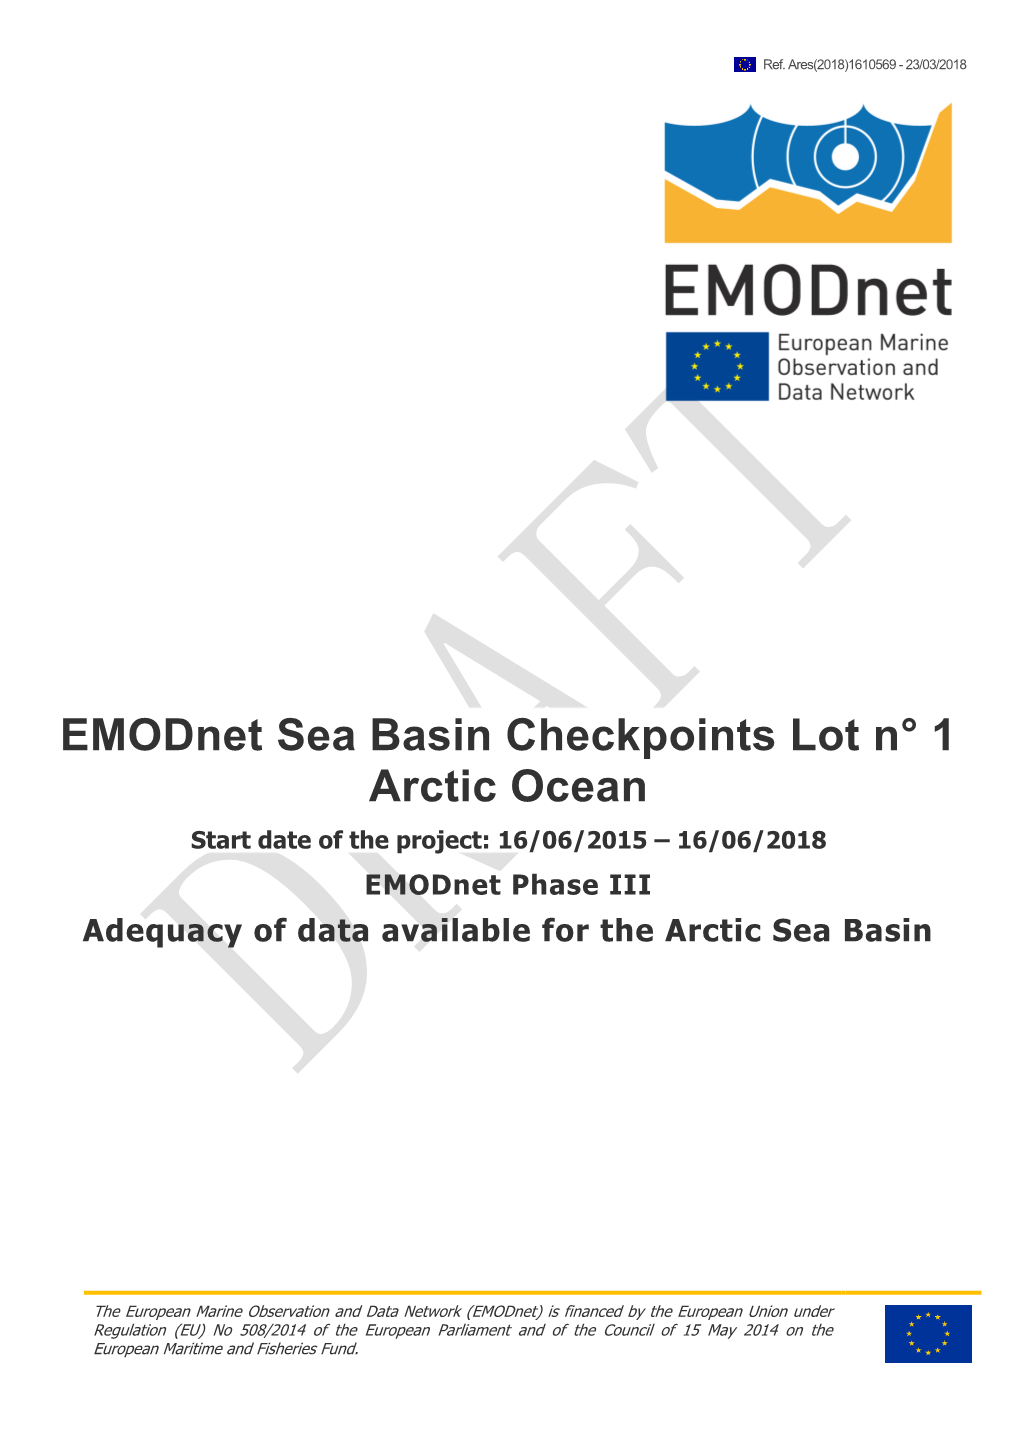 Emodnet Sea Basin Checkpoints Lot N° 1 Arctic Ocean